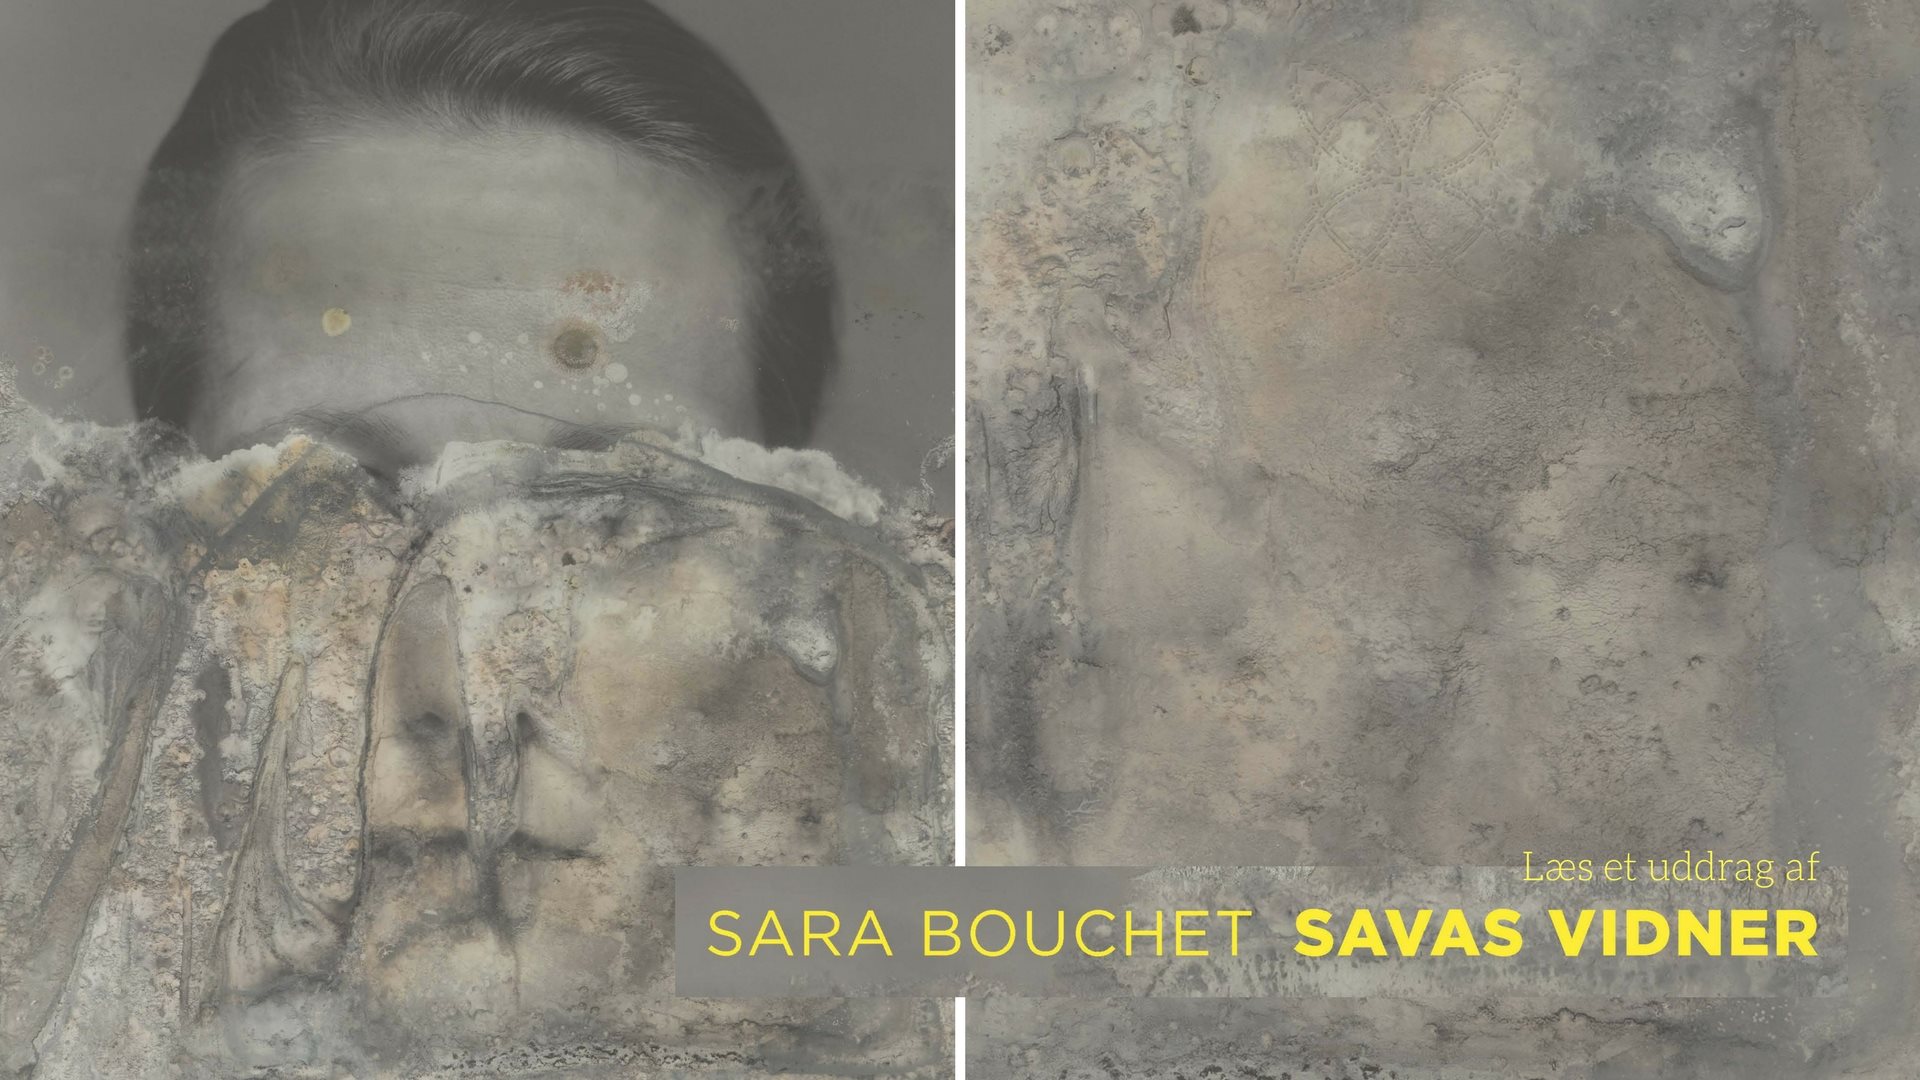 Savas Vidner, Sara Bouchet